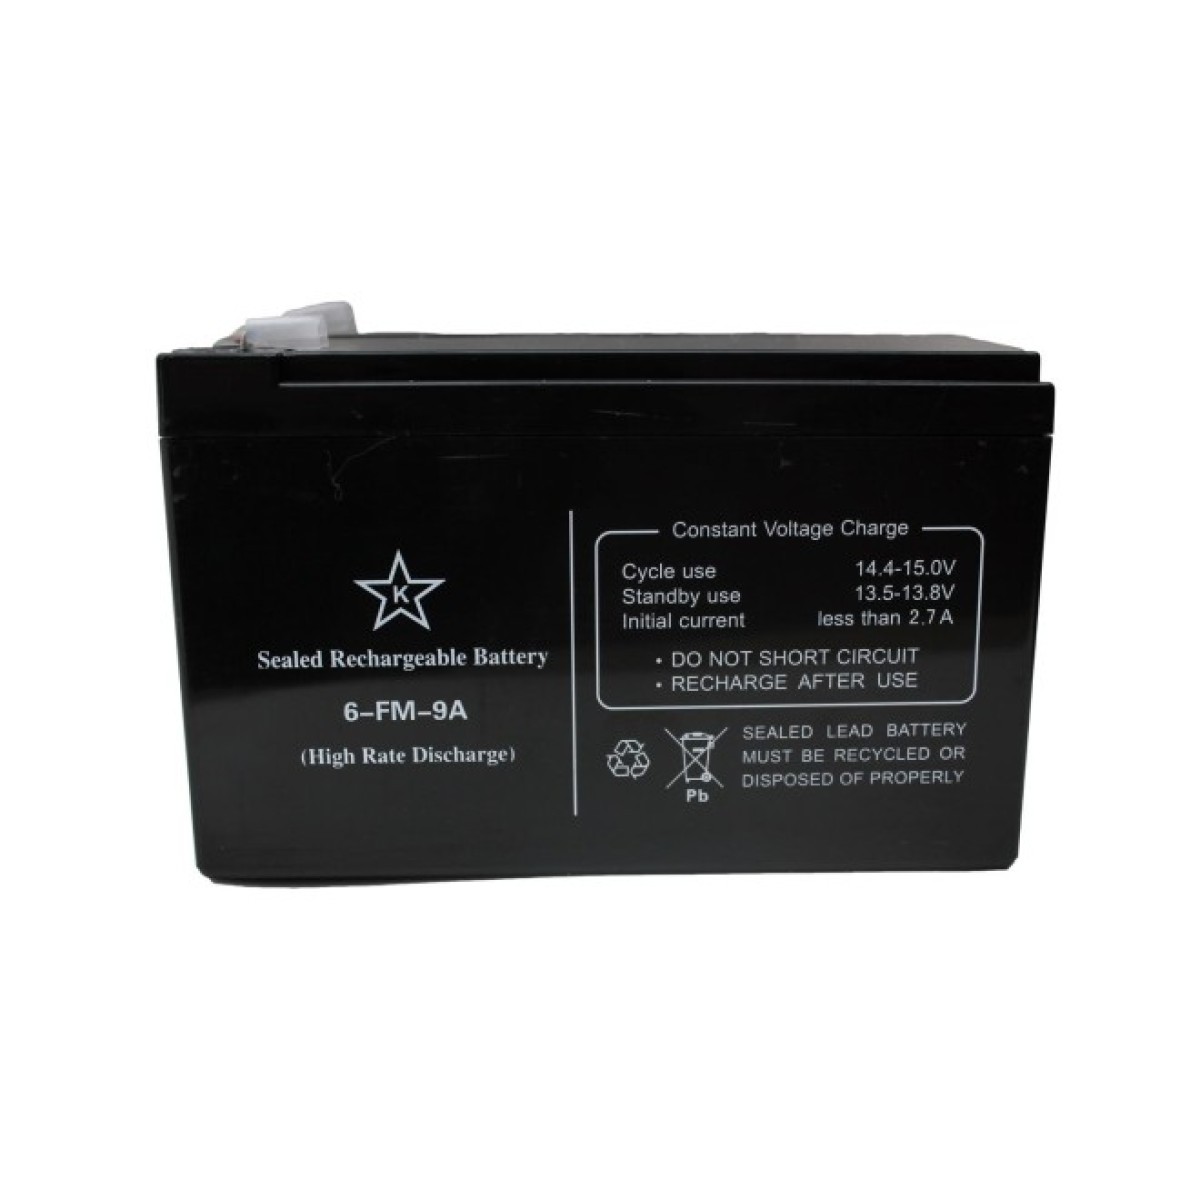 Батарея к ИБП Kstar 12В 9 Ач (6-FM-9A) (6-FM-9A) 256_256.jpg